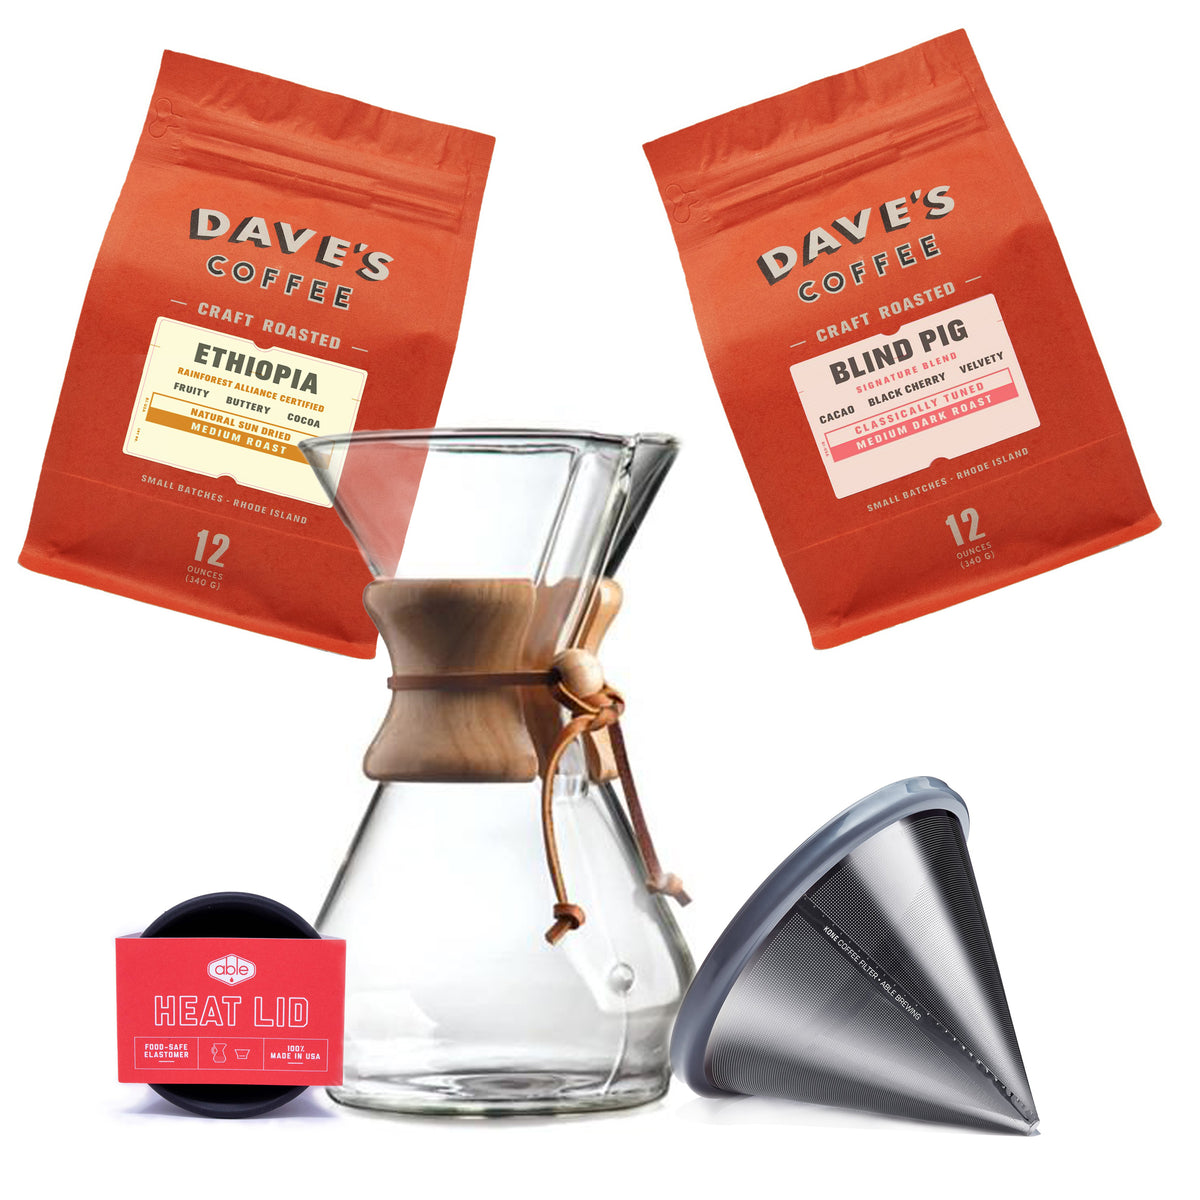 4-Pack Dave's Original RI Coffee Milk Syrup (8oz)